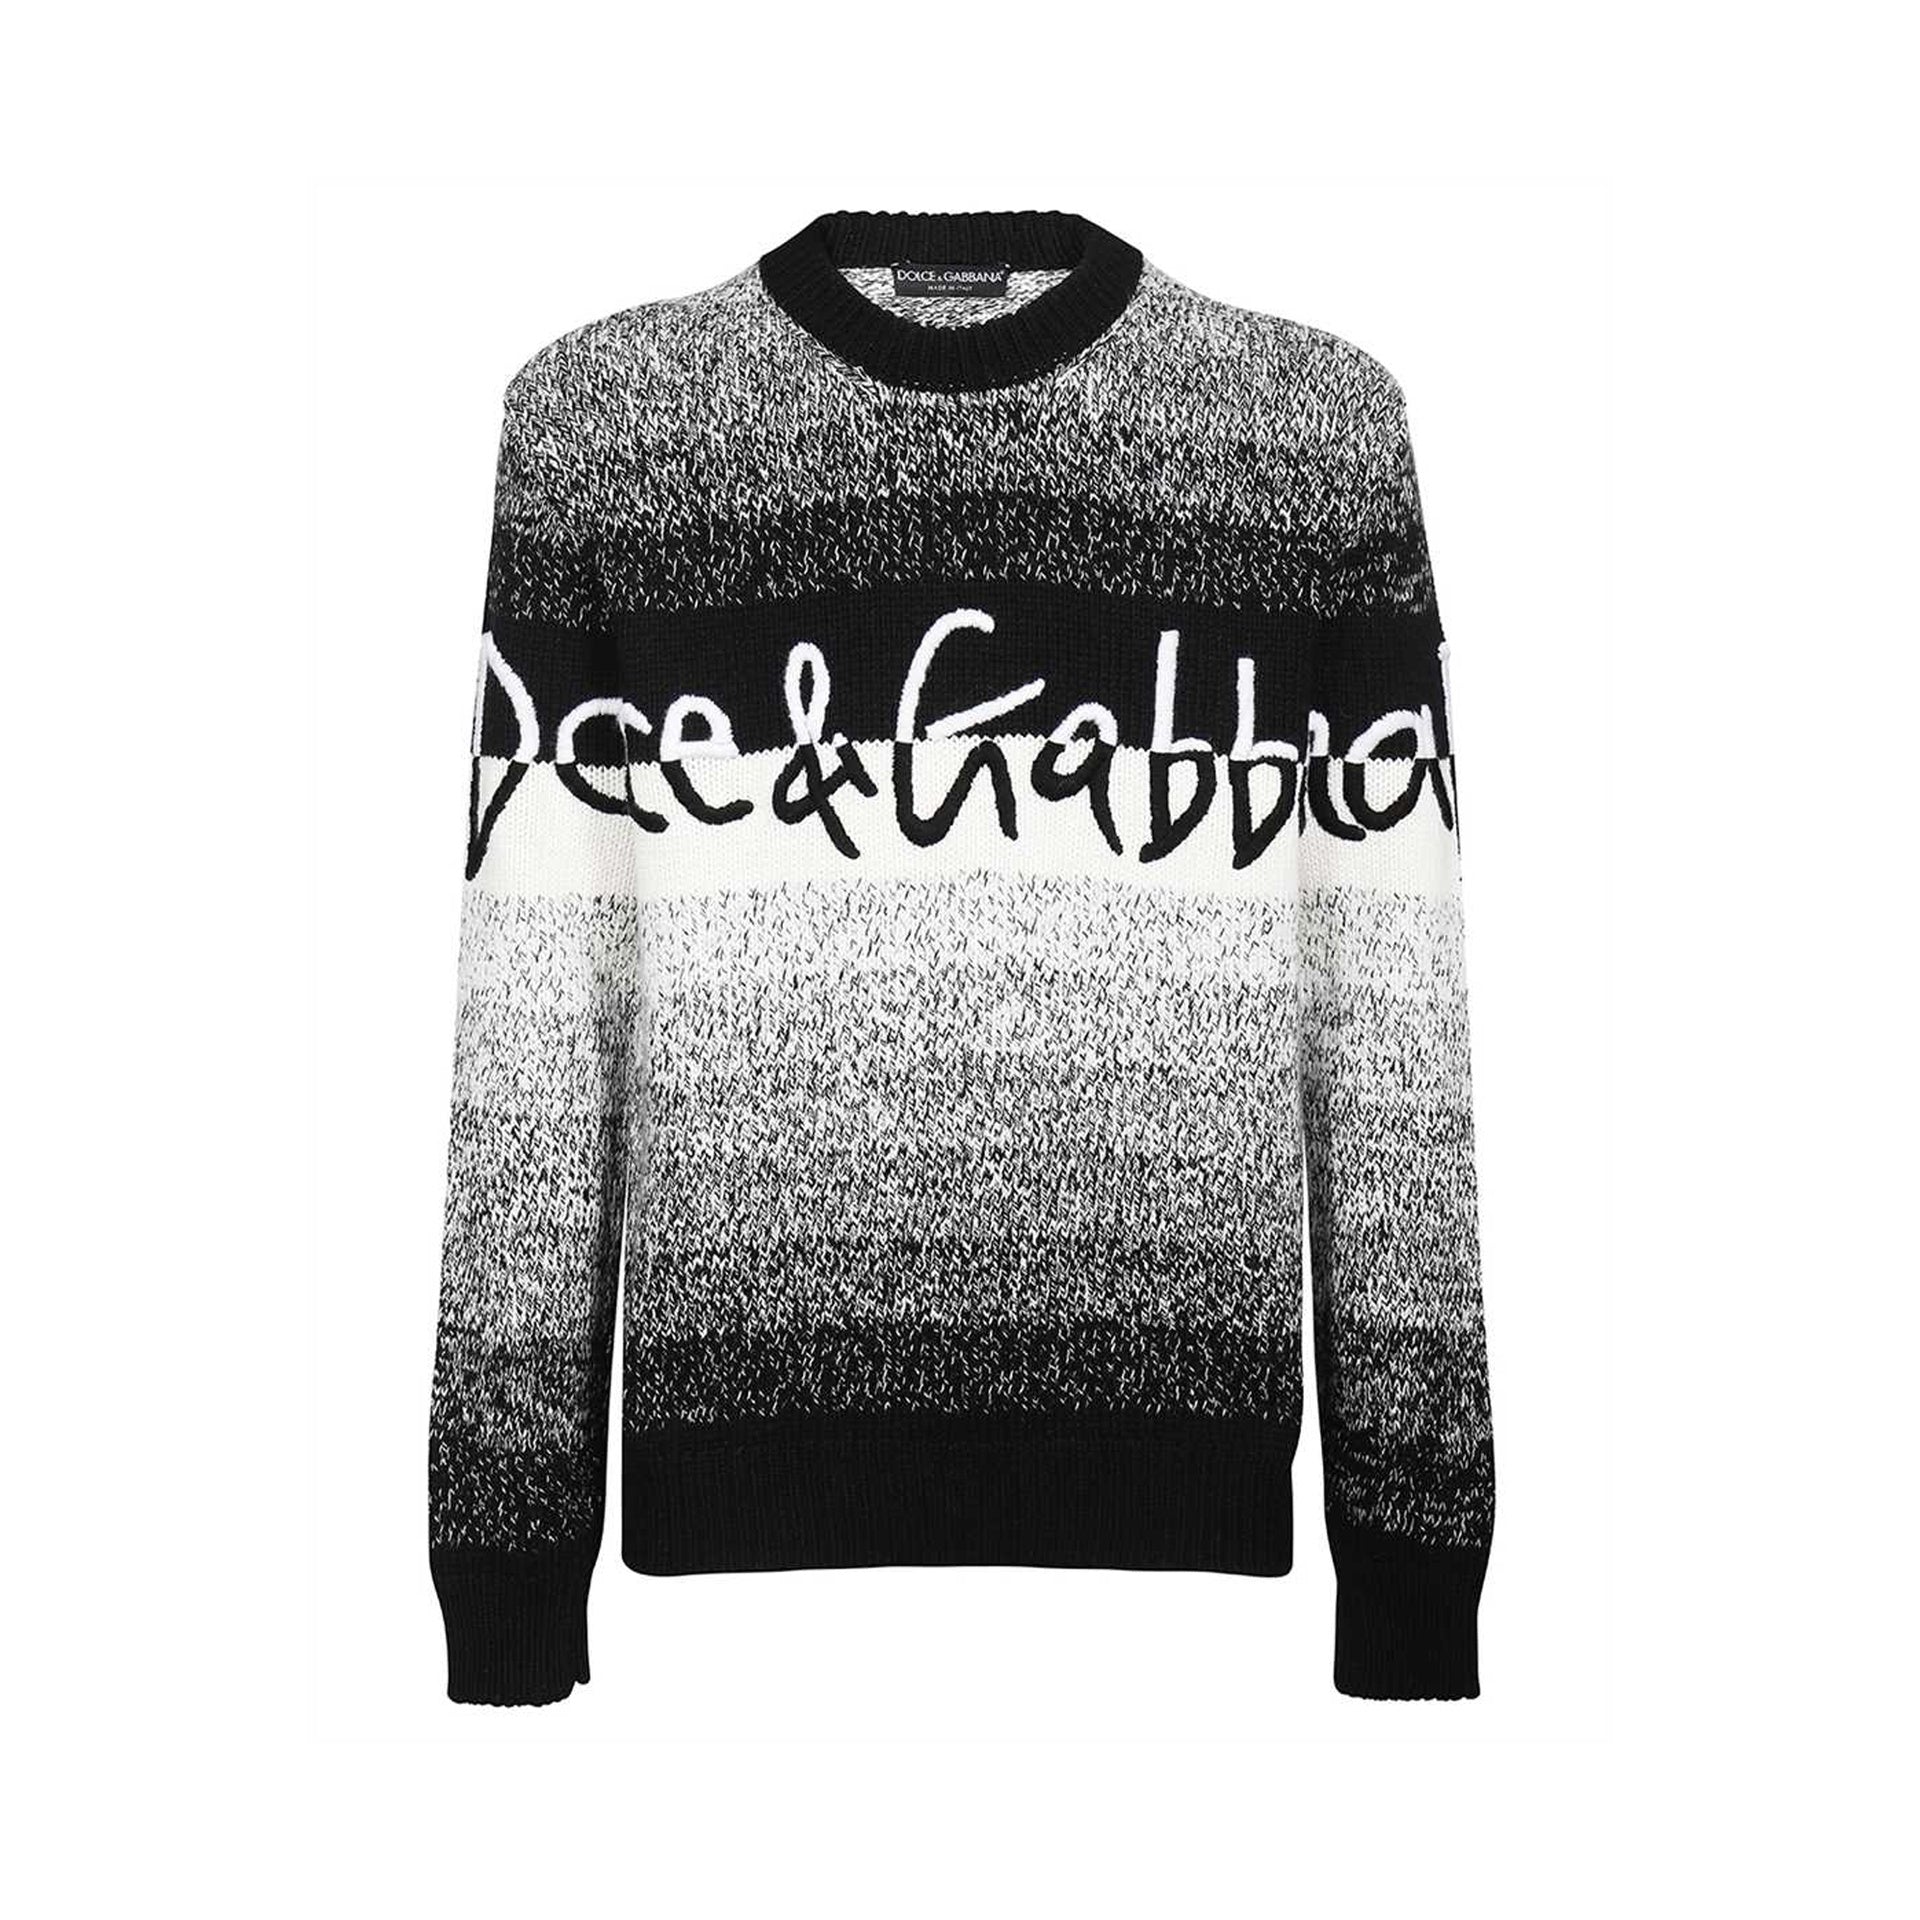 DOLCE___GABBANA_Dolce___Gabbana_Logo_Sweater_GX525Z_JCMA9_S9000_Black_1.jpg